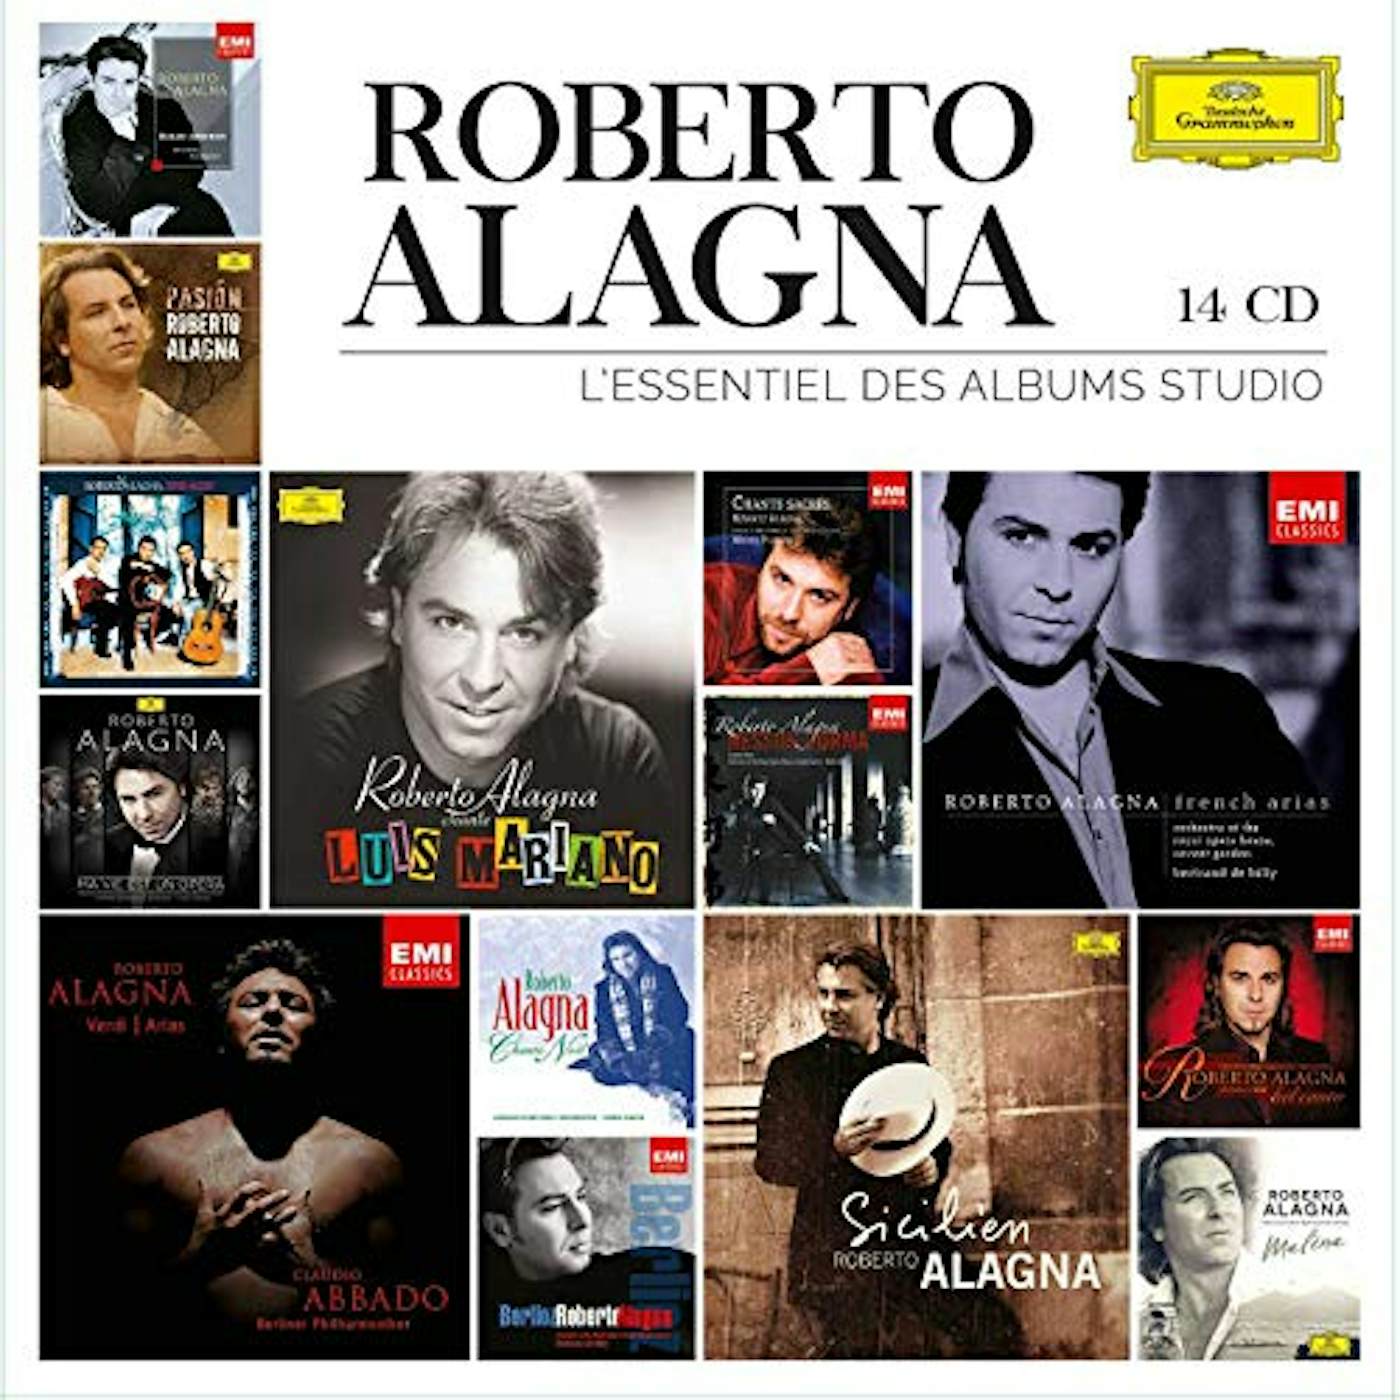 Roberto Alagna L'ESSENTIEL DES ALBUMS STUDIO CD